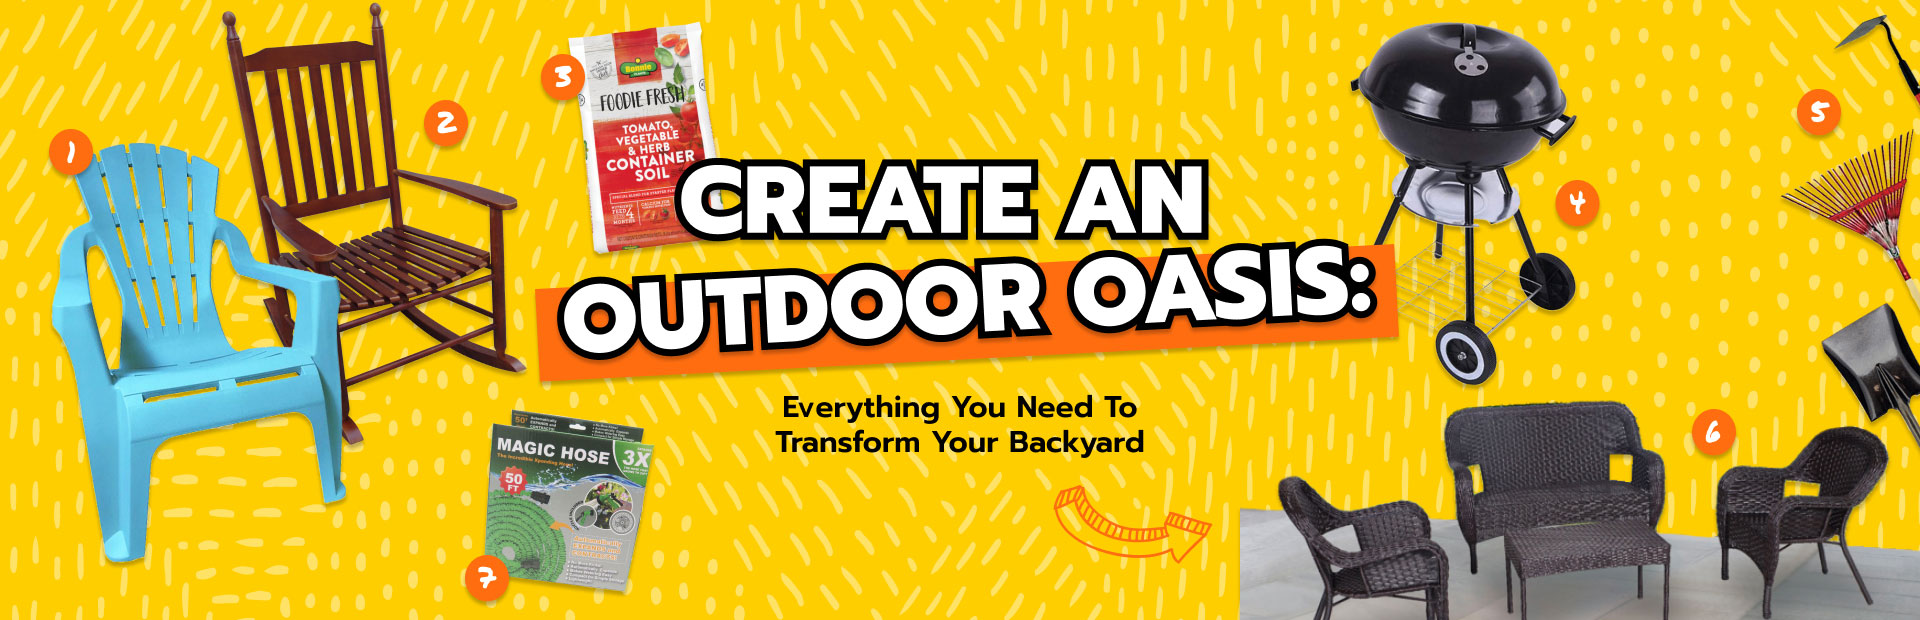 Create an outdoor oasis